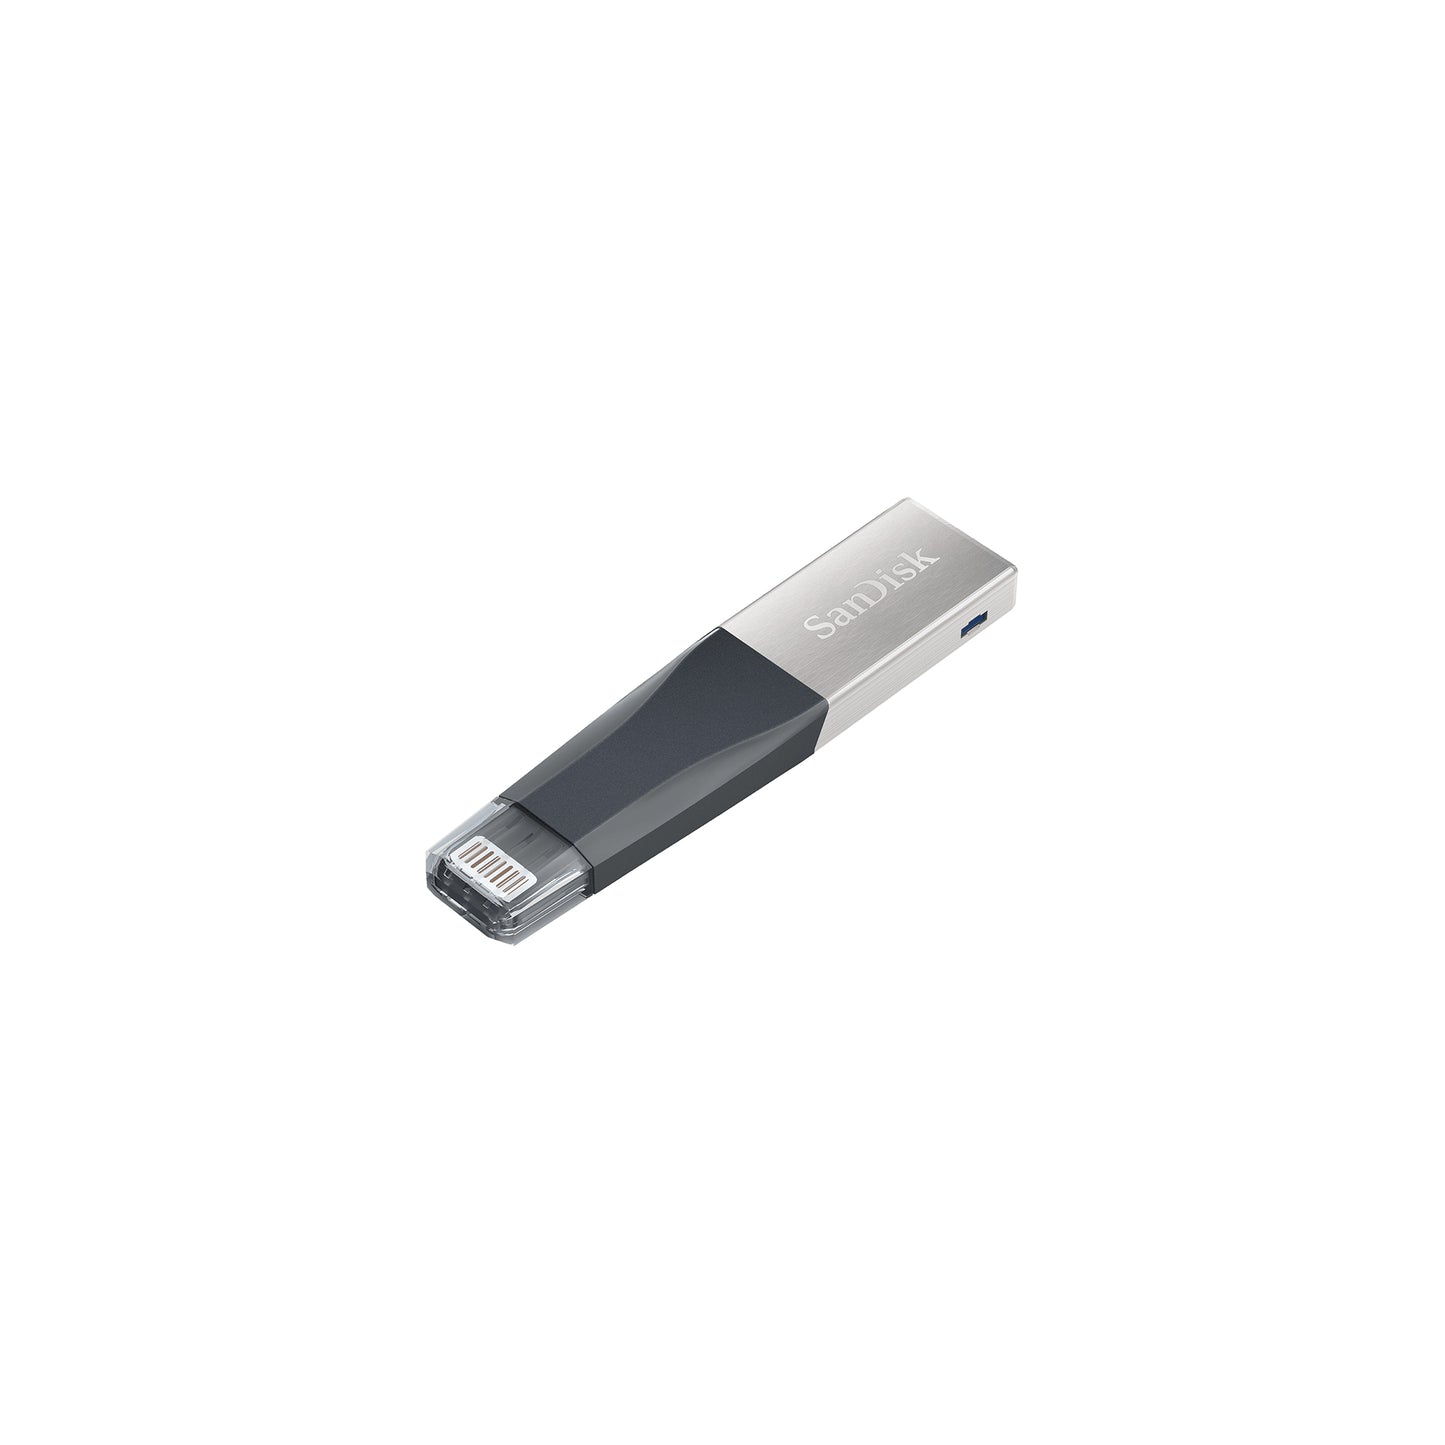 SANDISK iXpand Mini Flash Drive 64GB - Silver